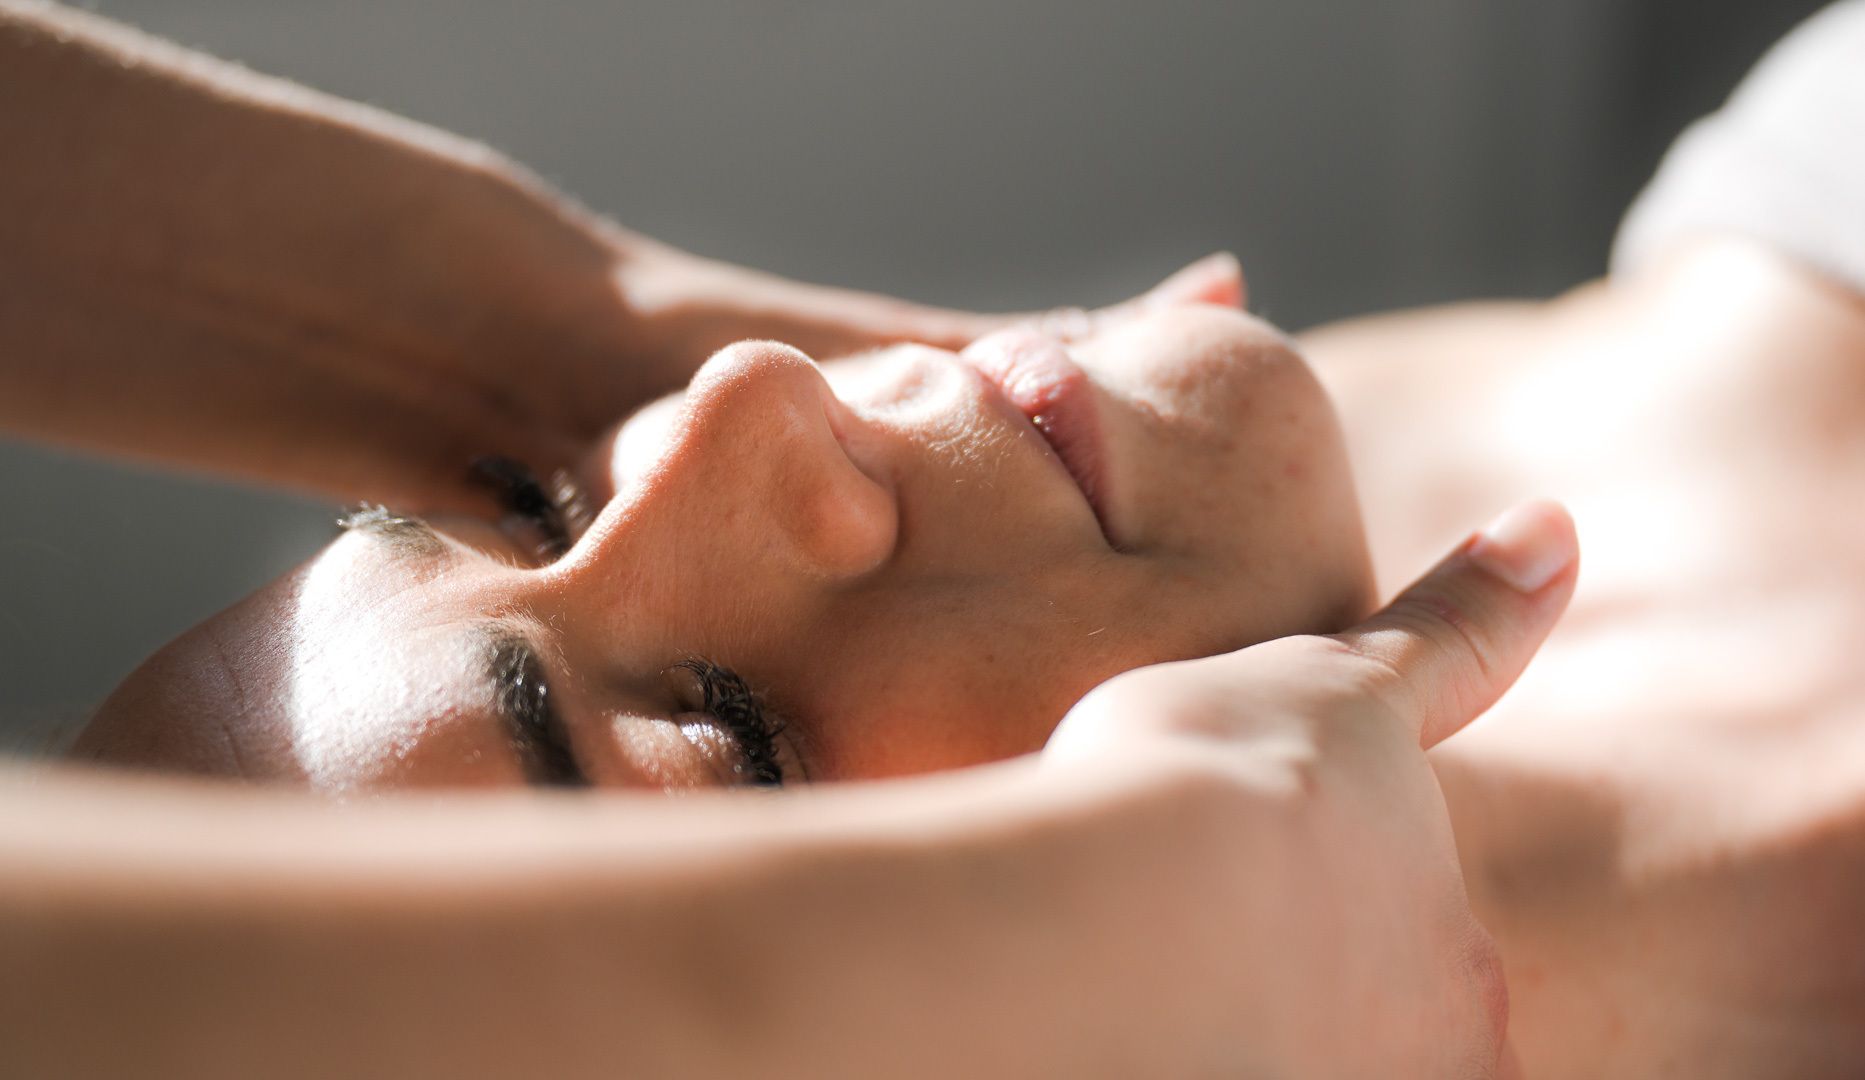 Lymfe Detox-massage fra Aku Spa